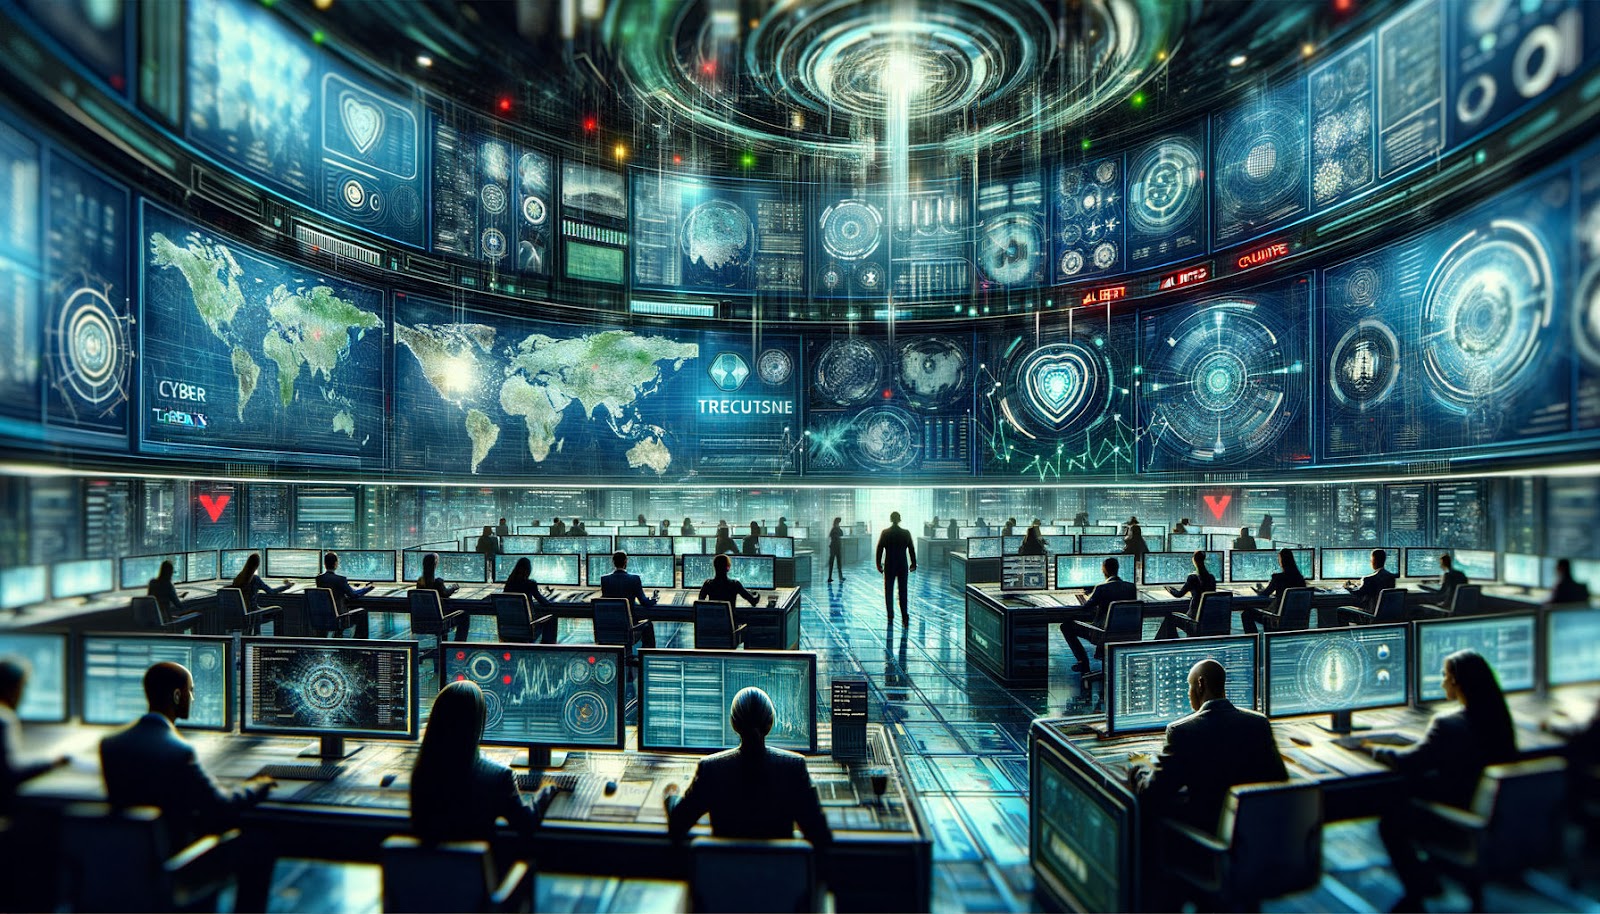 Futuristic Cybersecurity Command Center